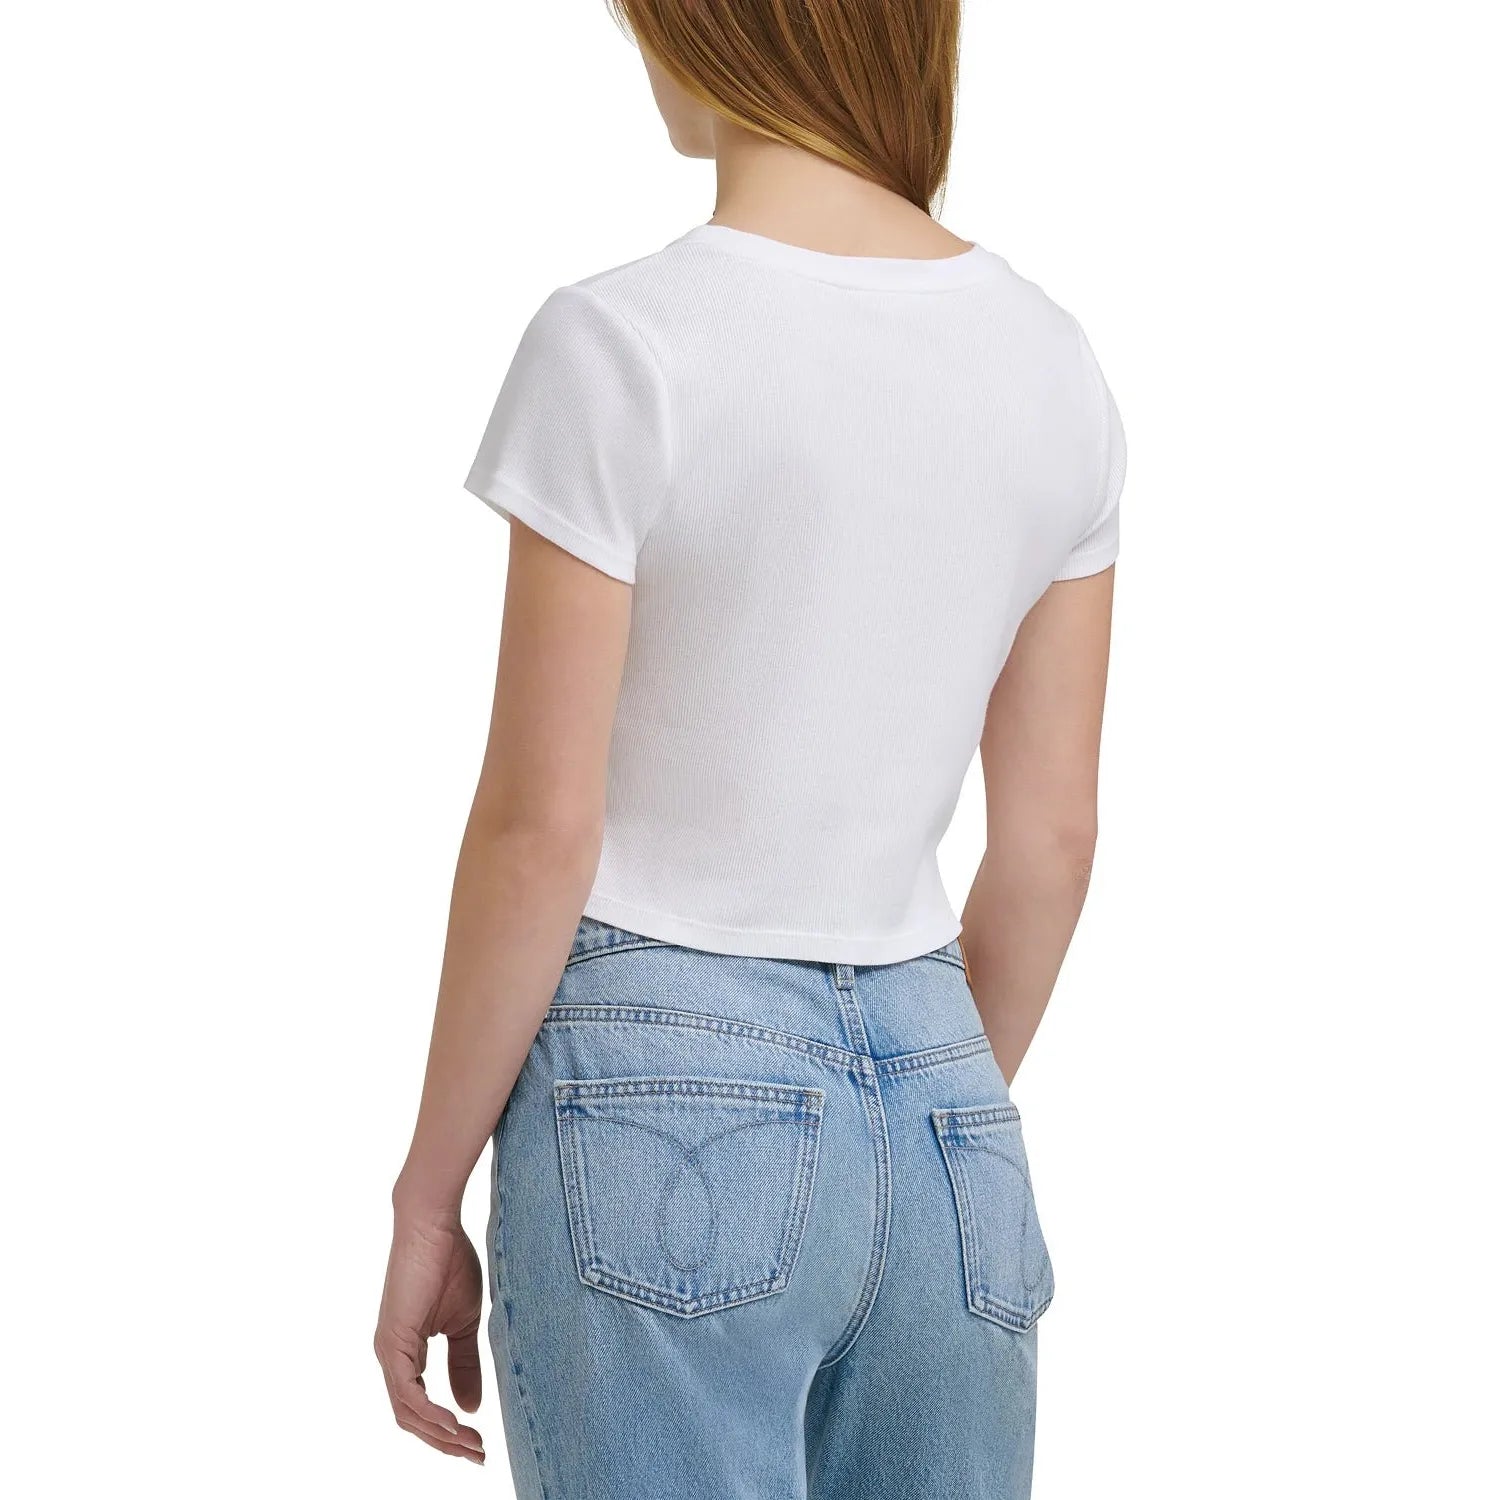 Calvin Klein-Calvin Klein Jeans Cotton Crop Top, White, Size: S - Brandat Outlet